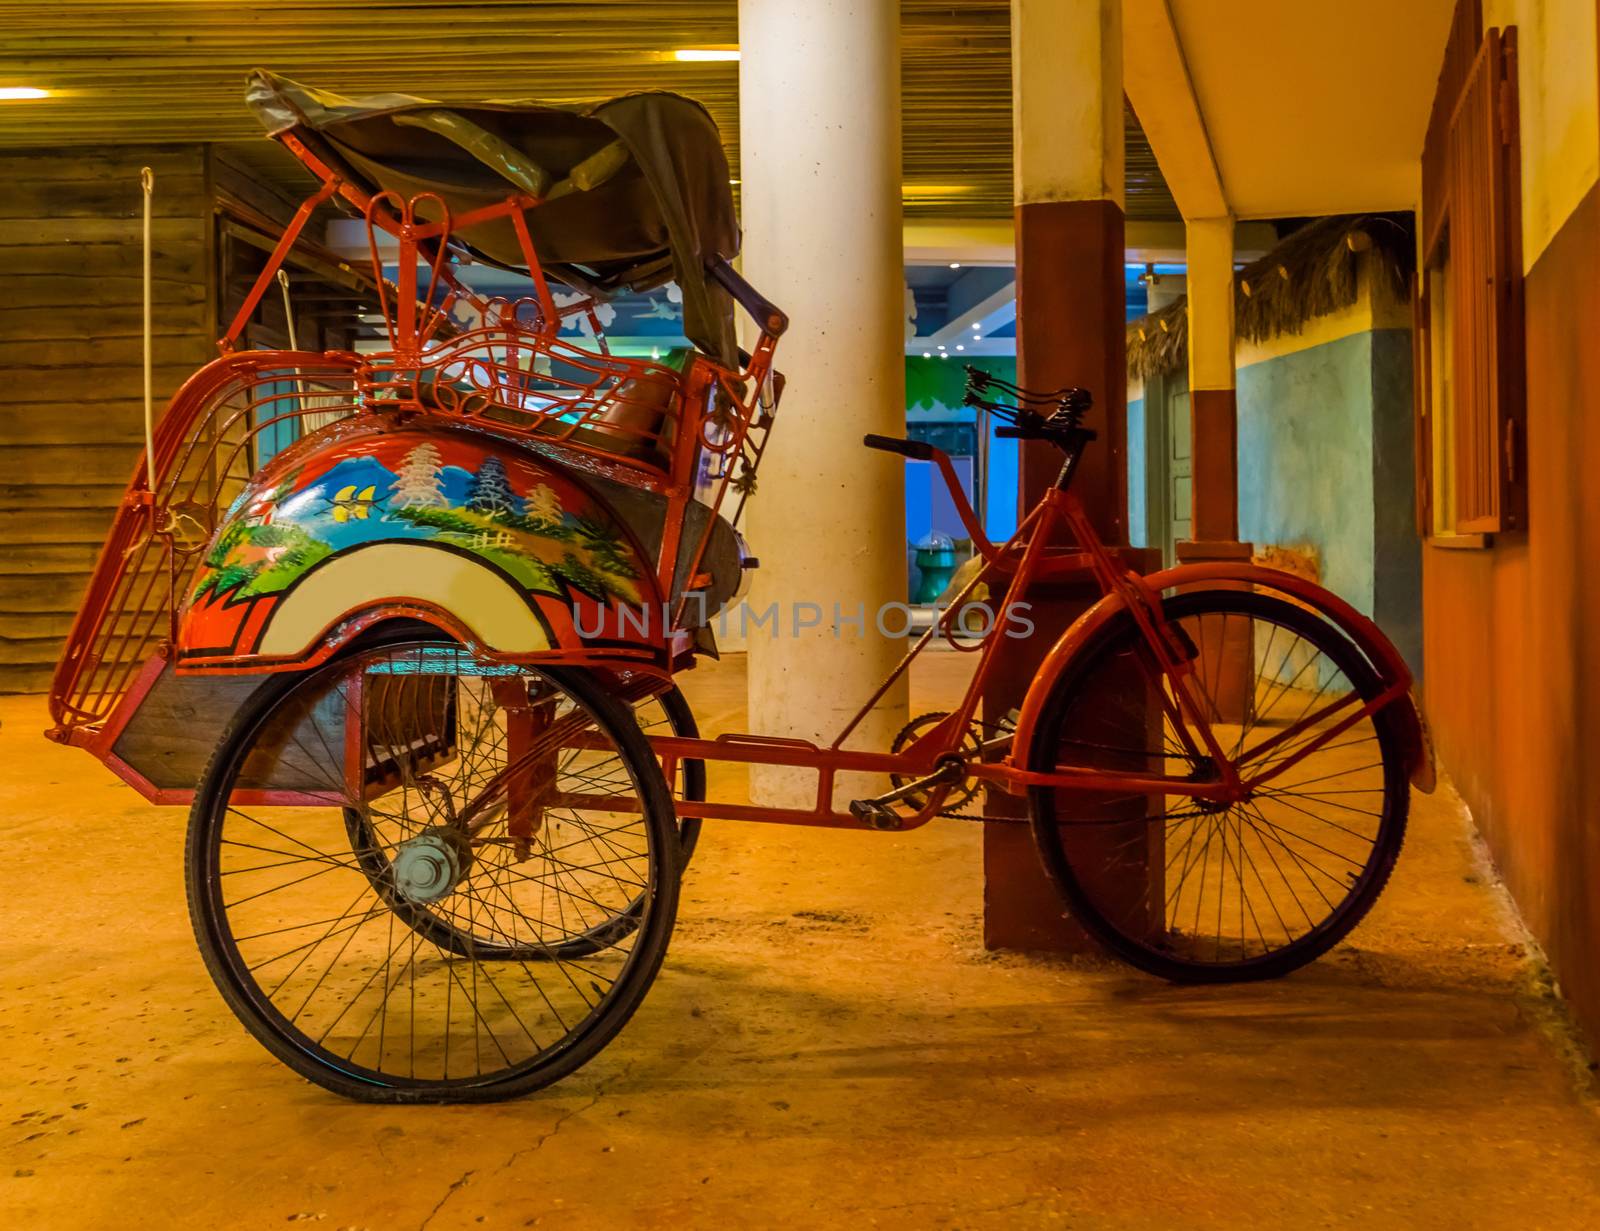 red vintage ricksha, traditional cycle rickshaw, Vintage transportation vehicle from Asia